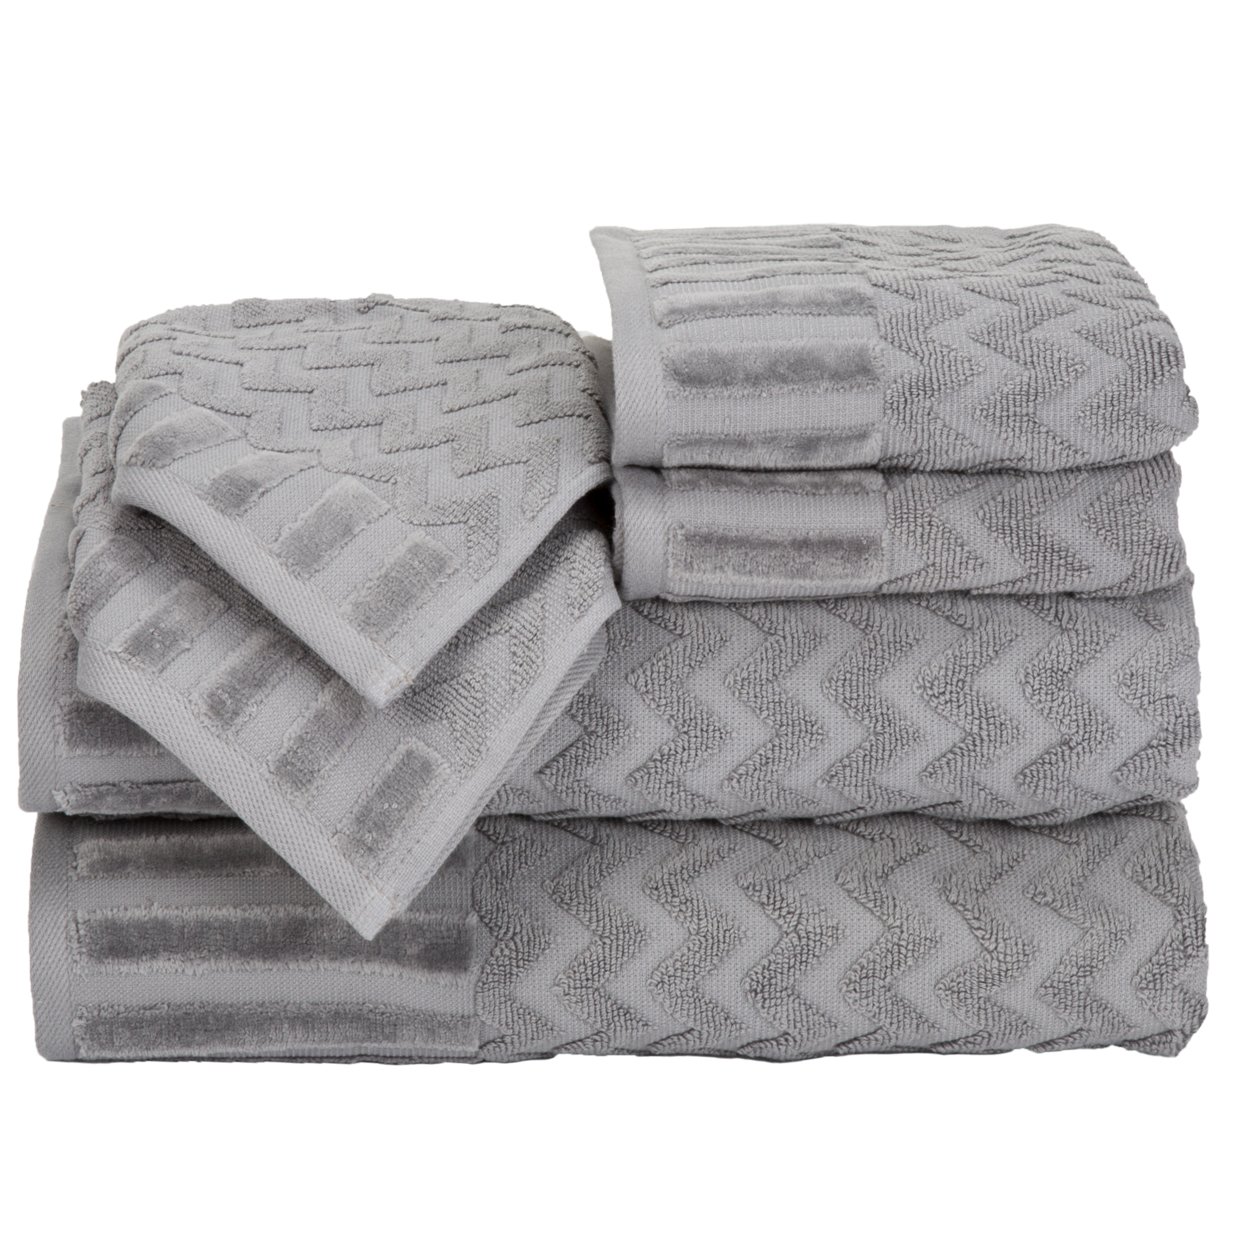 Lavish Home Chevron 100% Cotton 6 Piece Towel Set - Silver